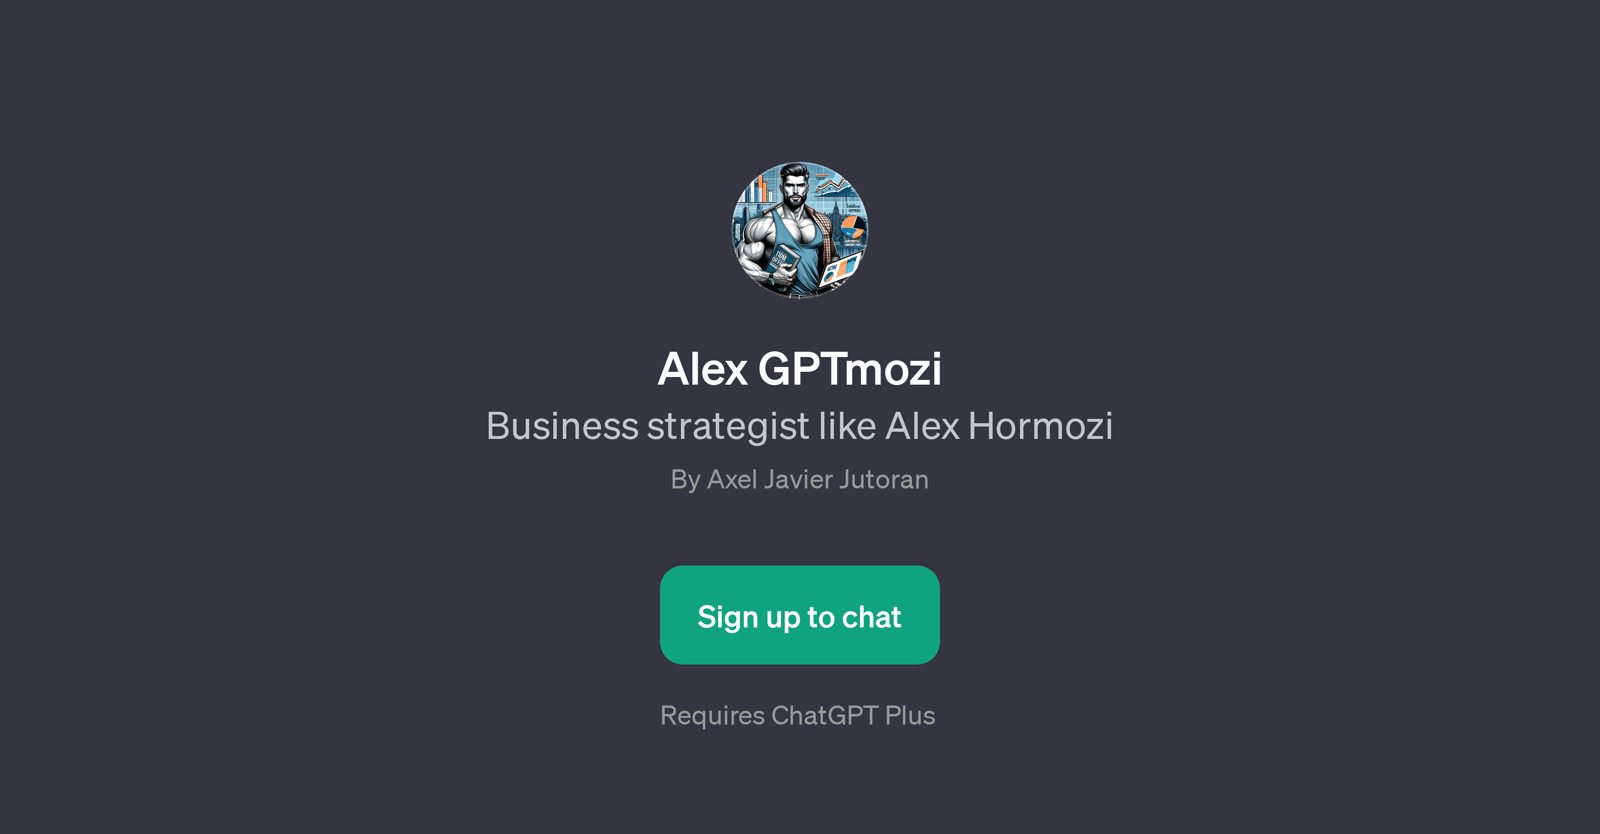 Alex GPTmozi website